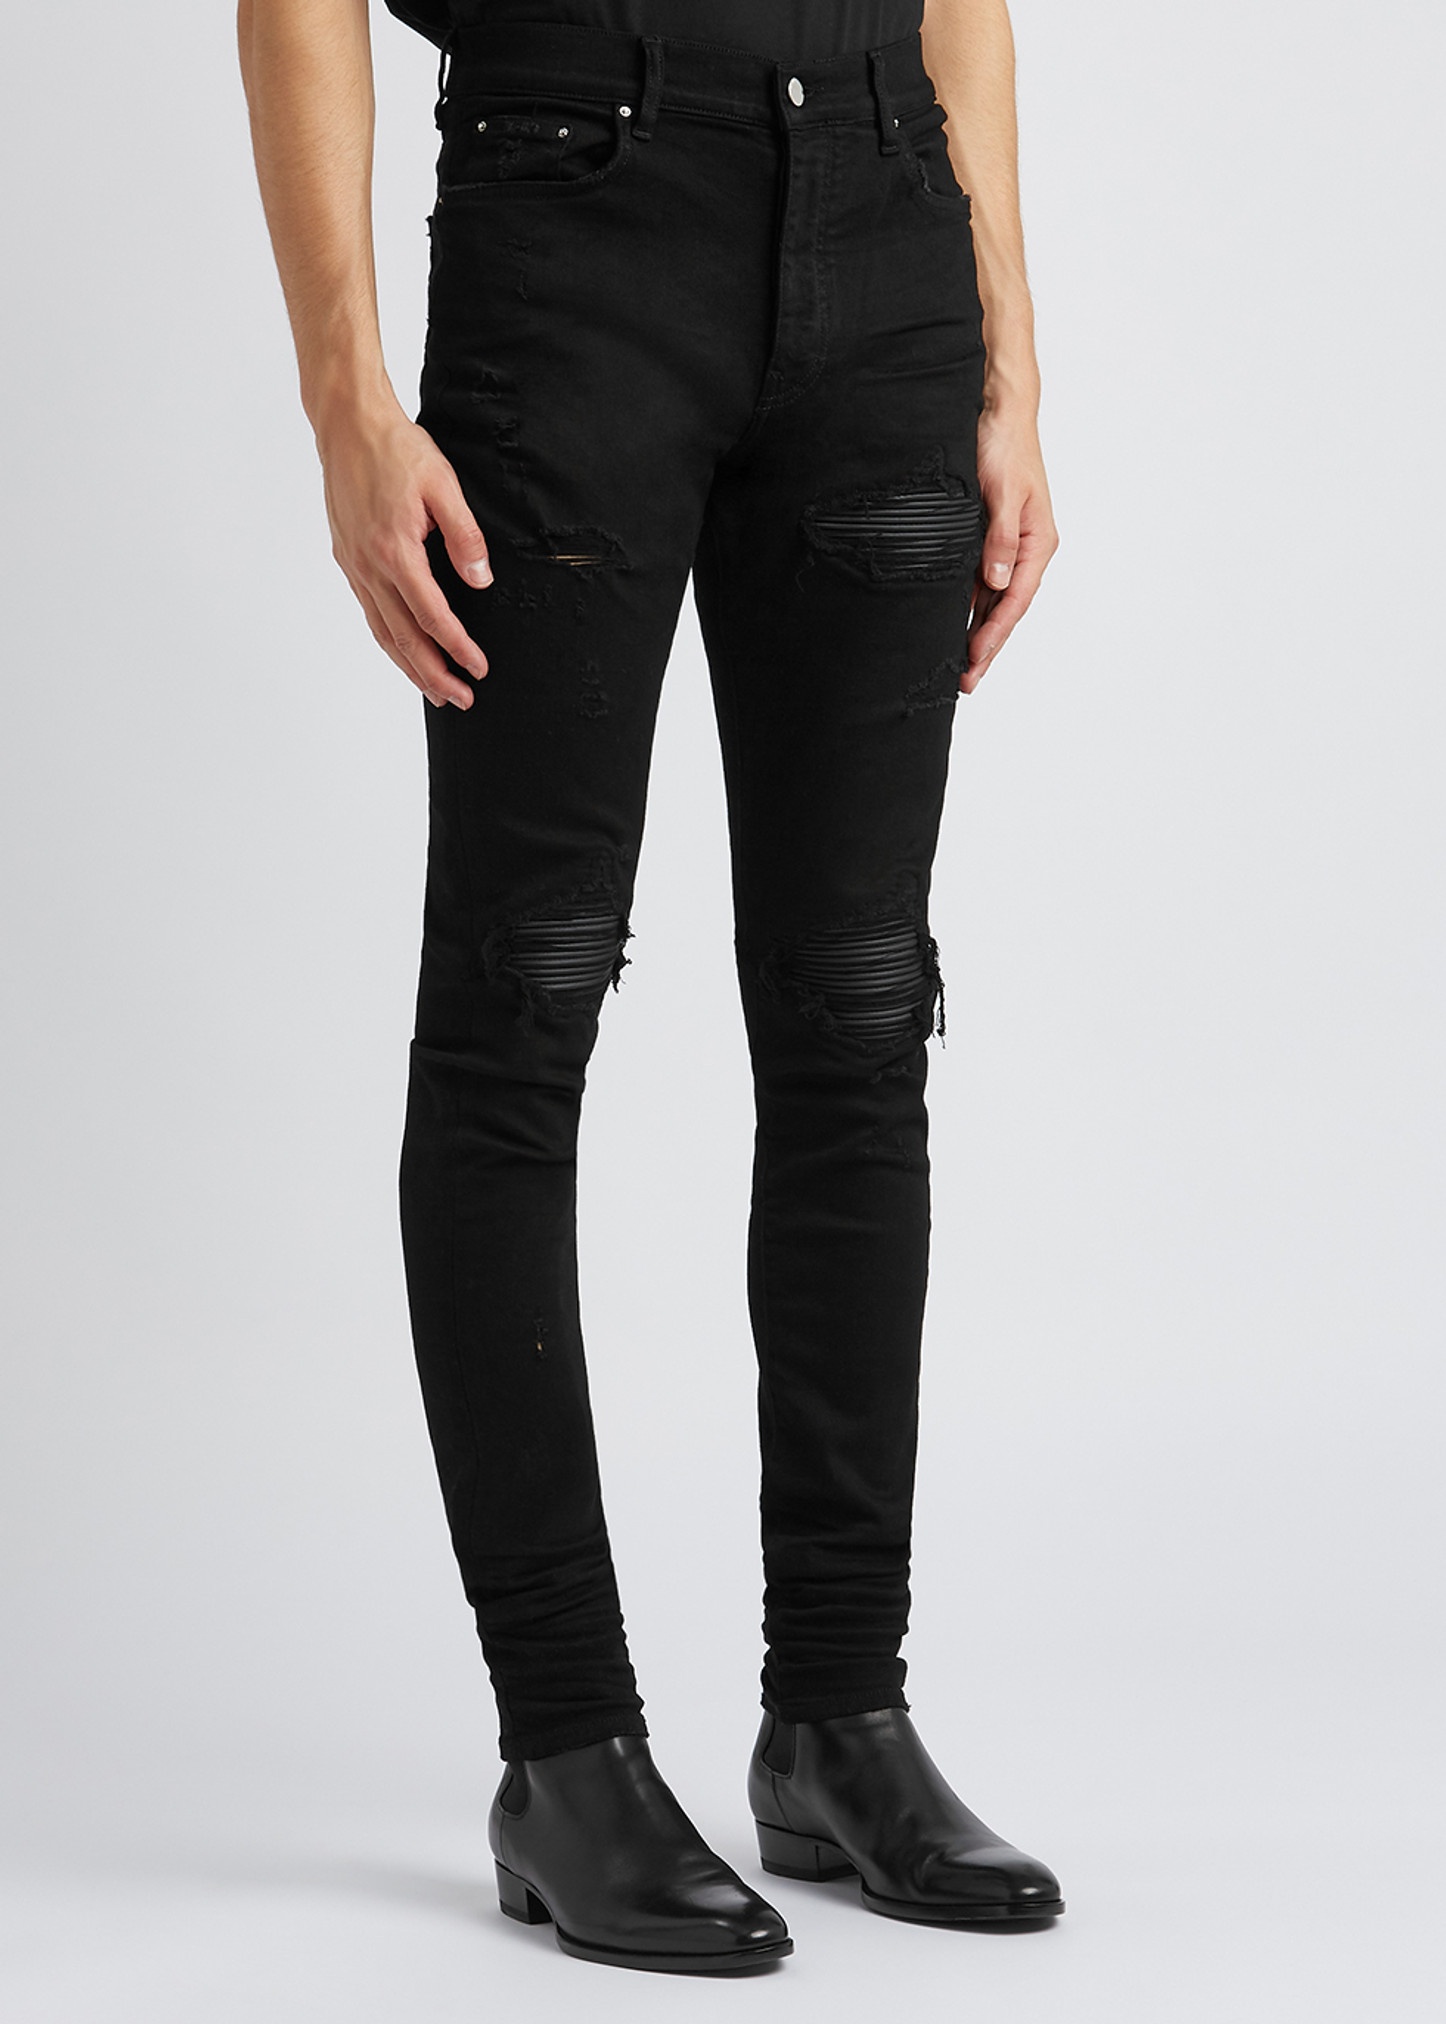 MX1 black distressed skinny jeans - 2